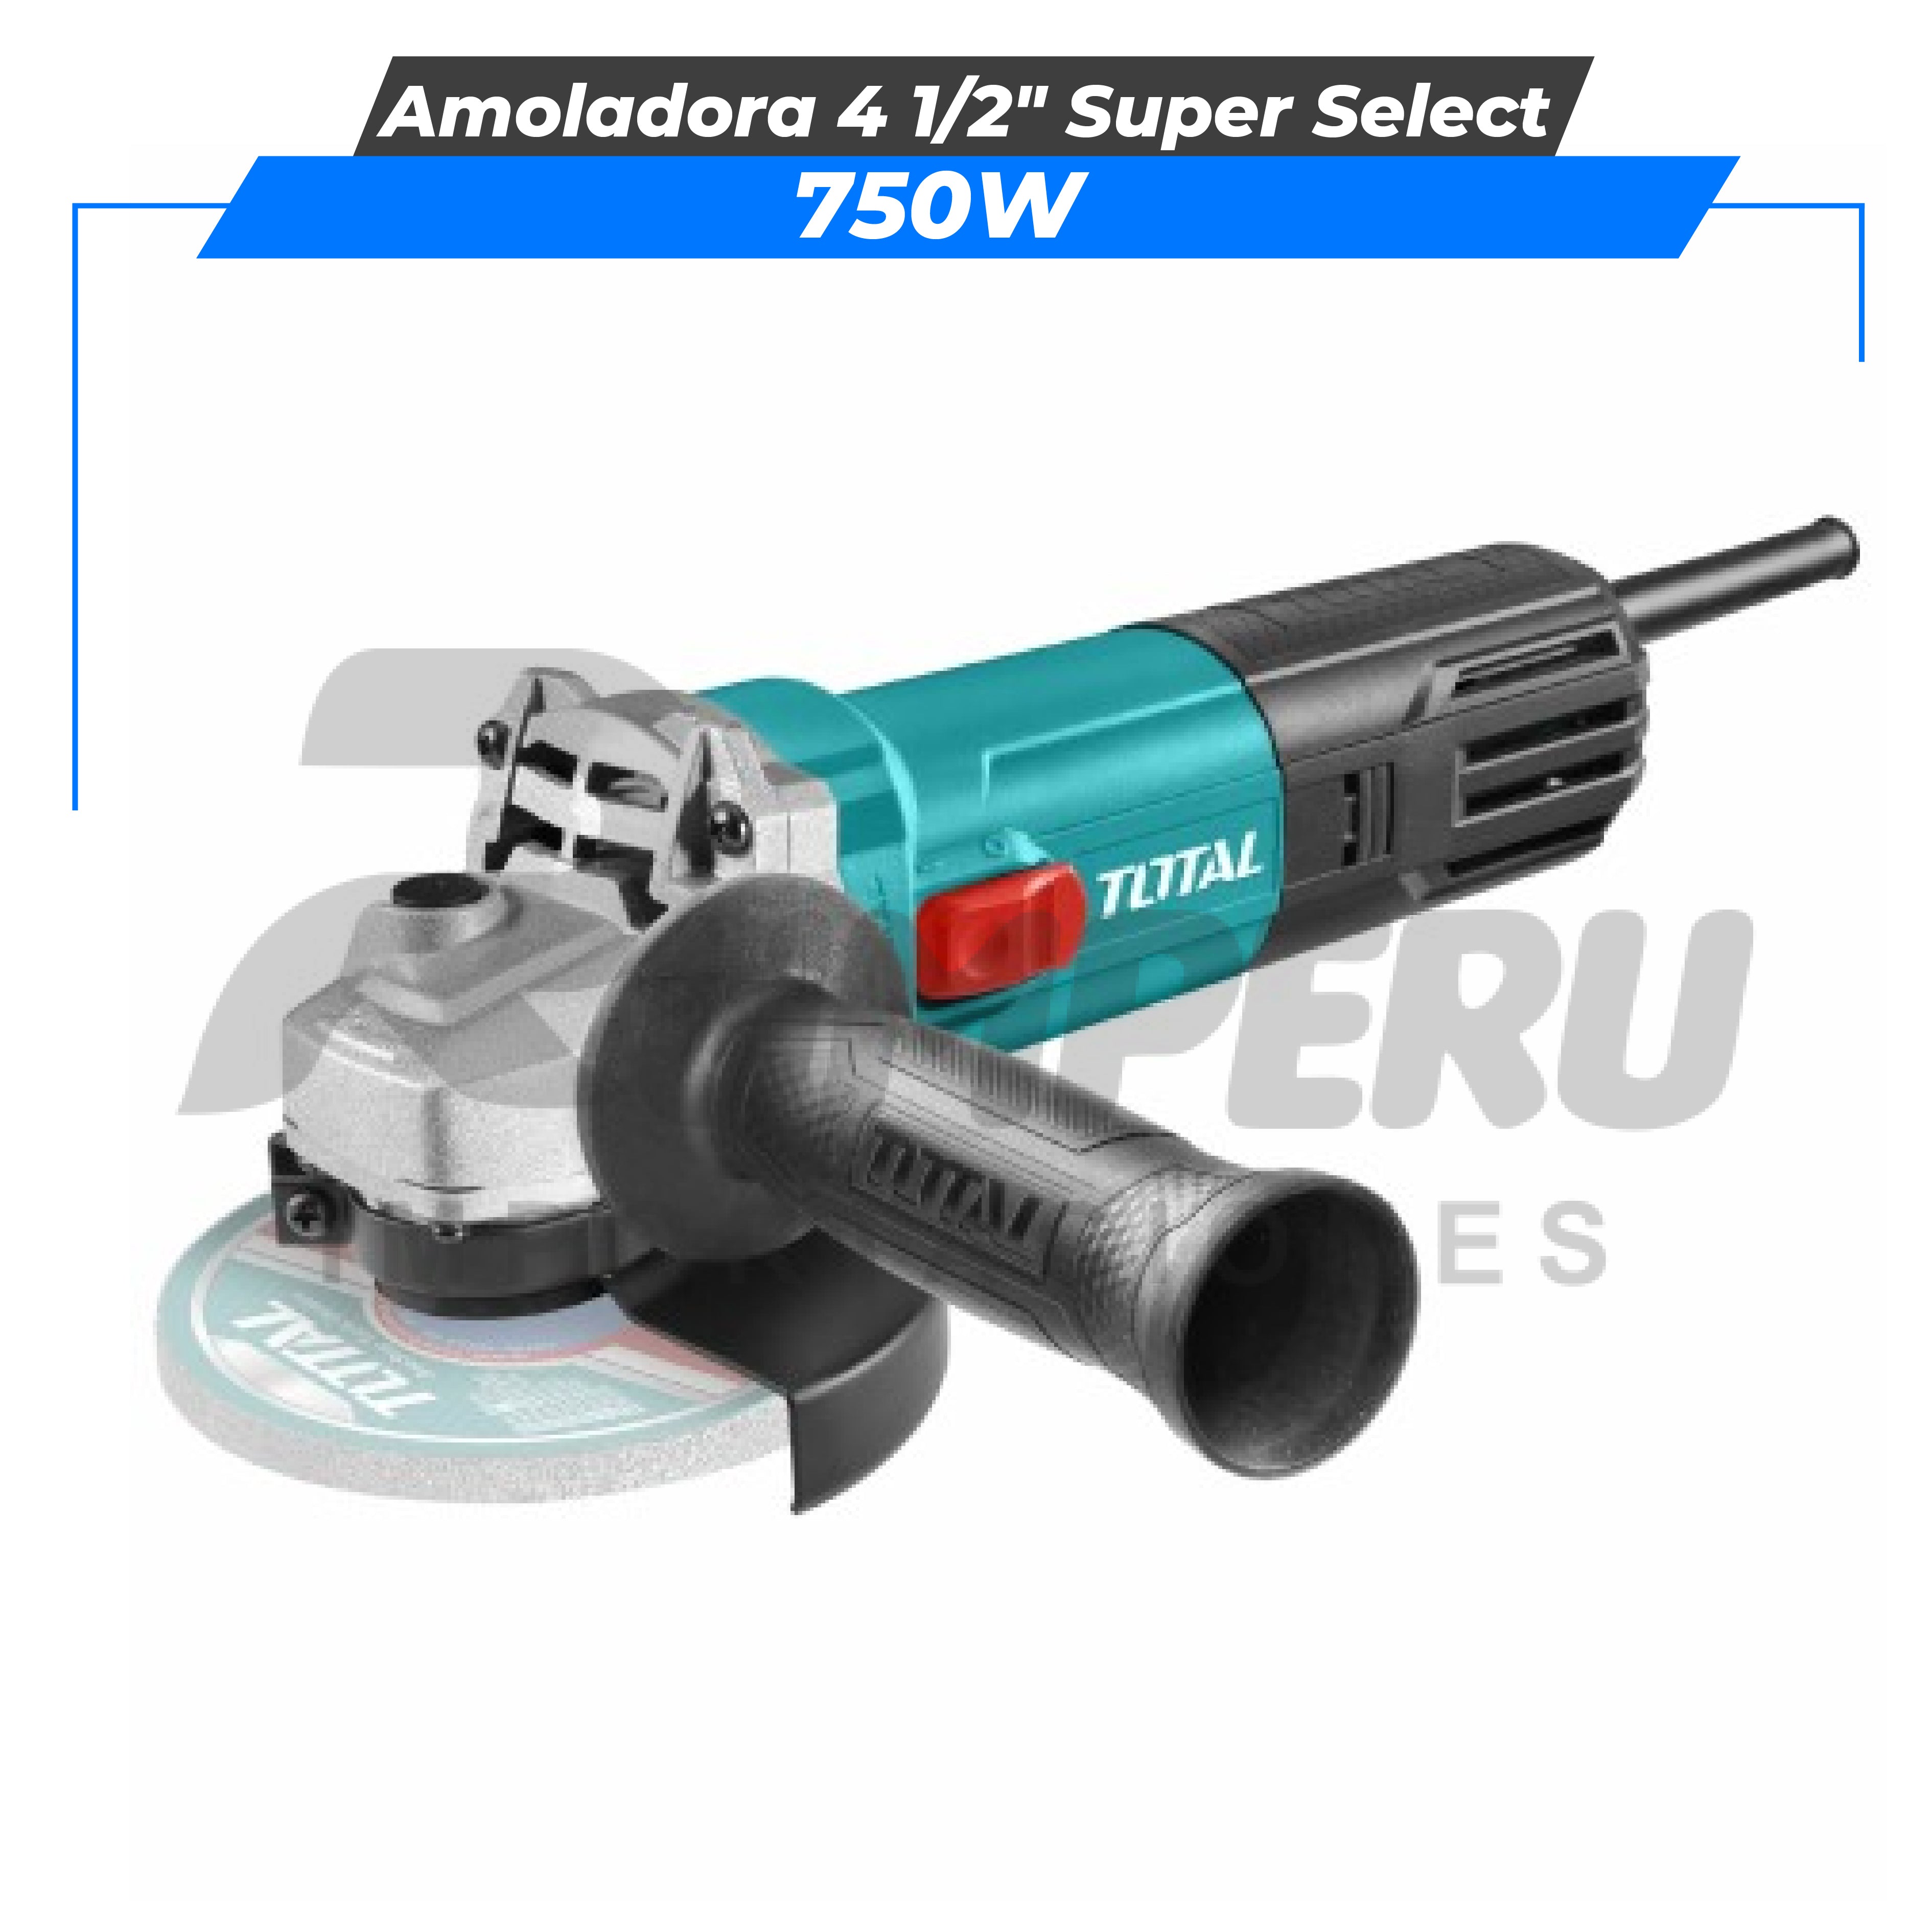 Amoladora 4 1/2" 750W SUPER SELECT